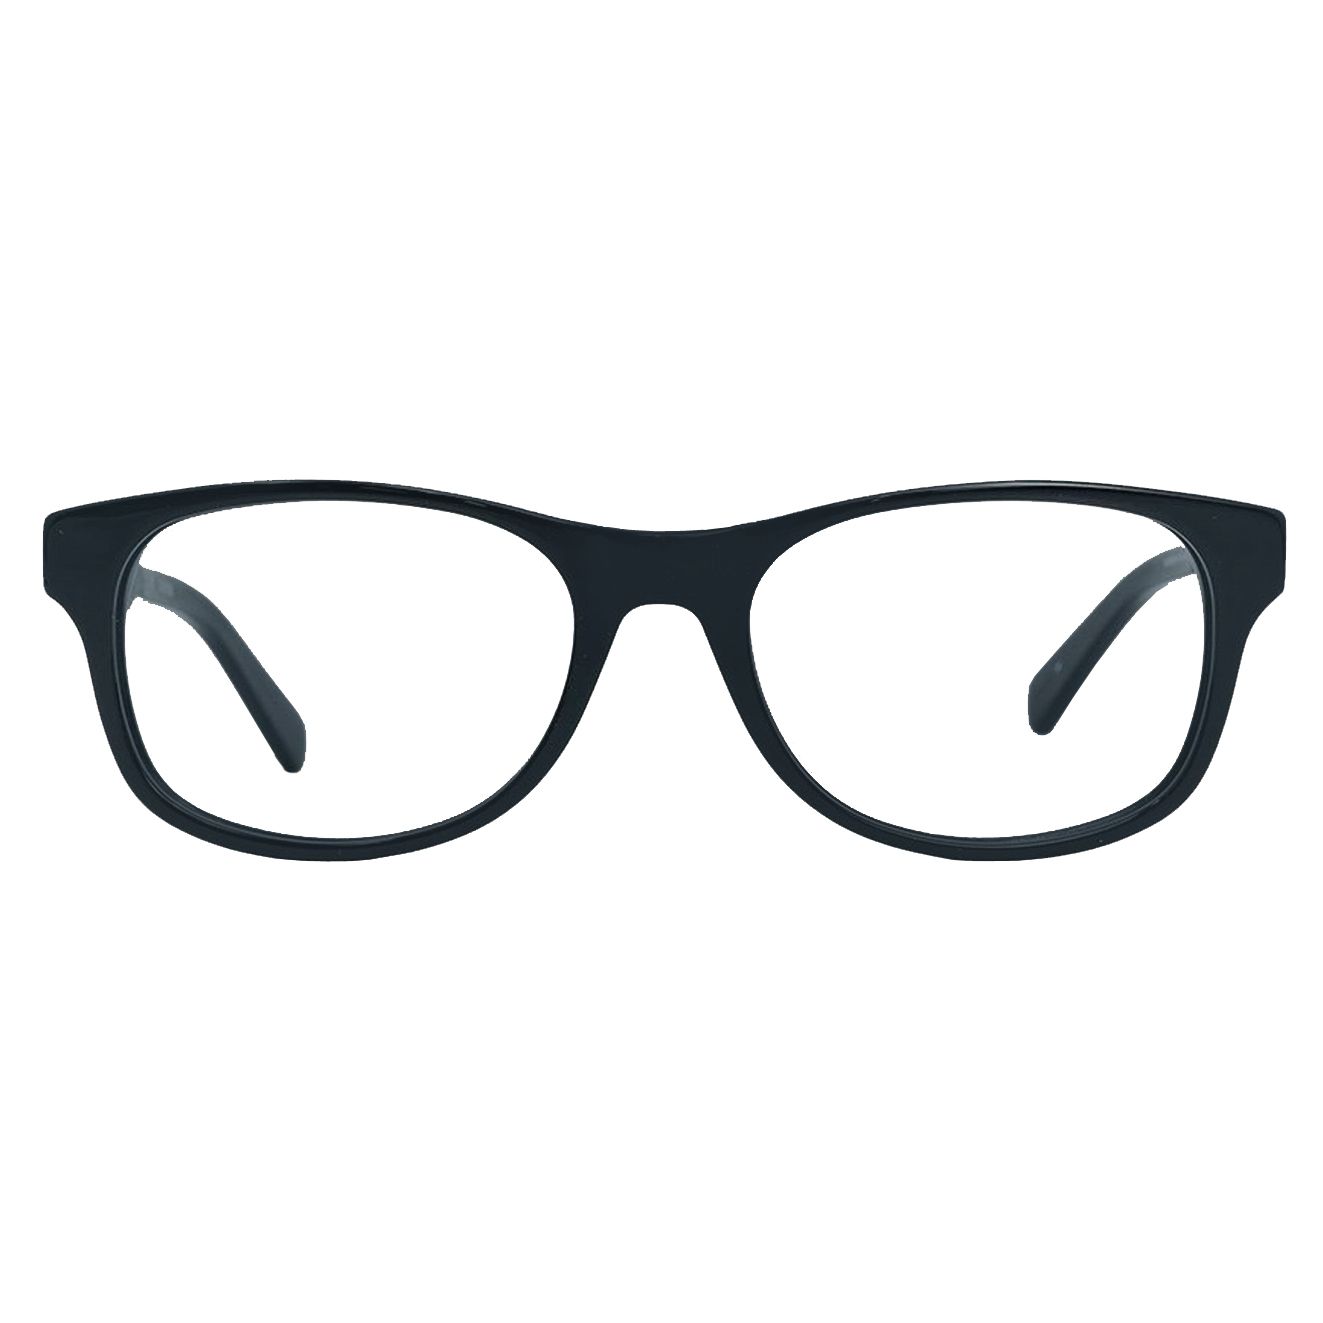 فریم عینک طبی گس مدل GU185800151 -  - 1